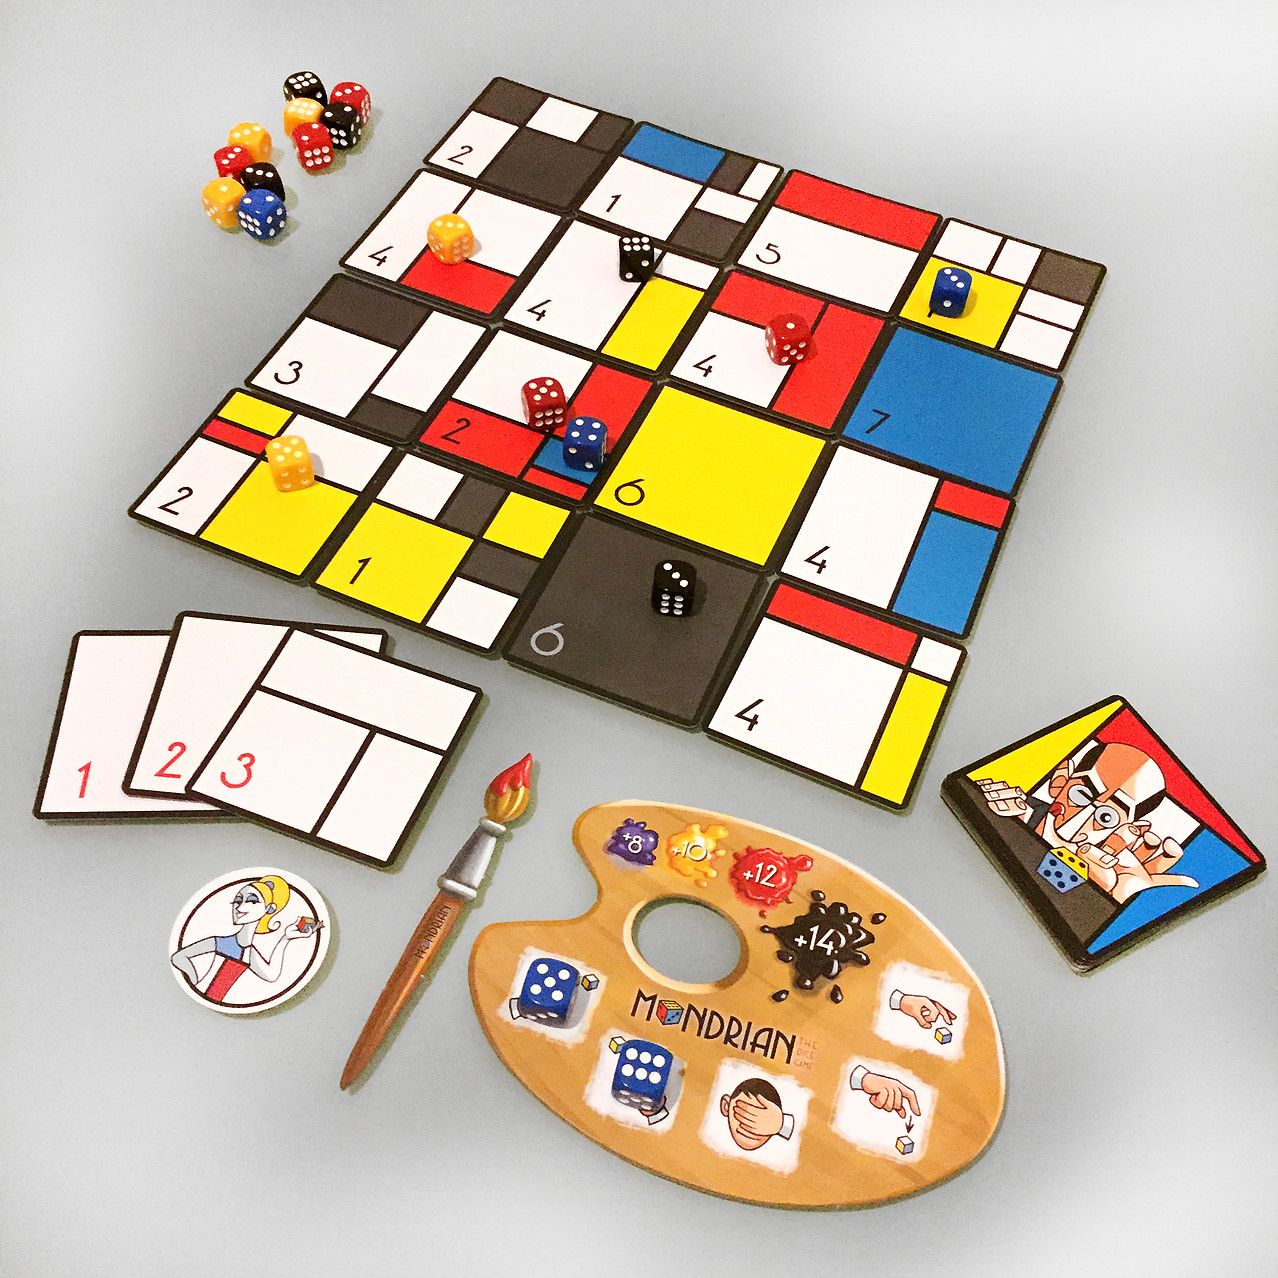 Mondrian the dice game juegos de cartas